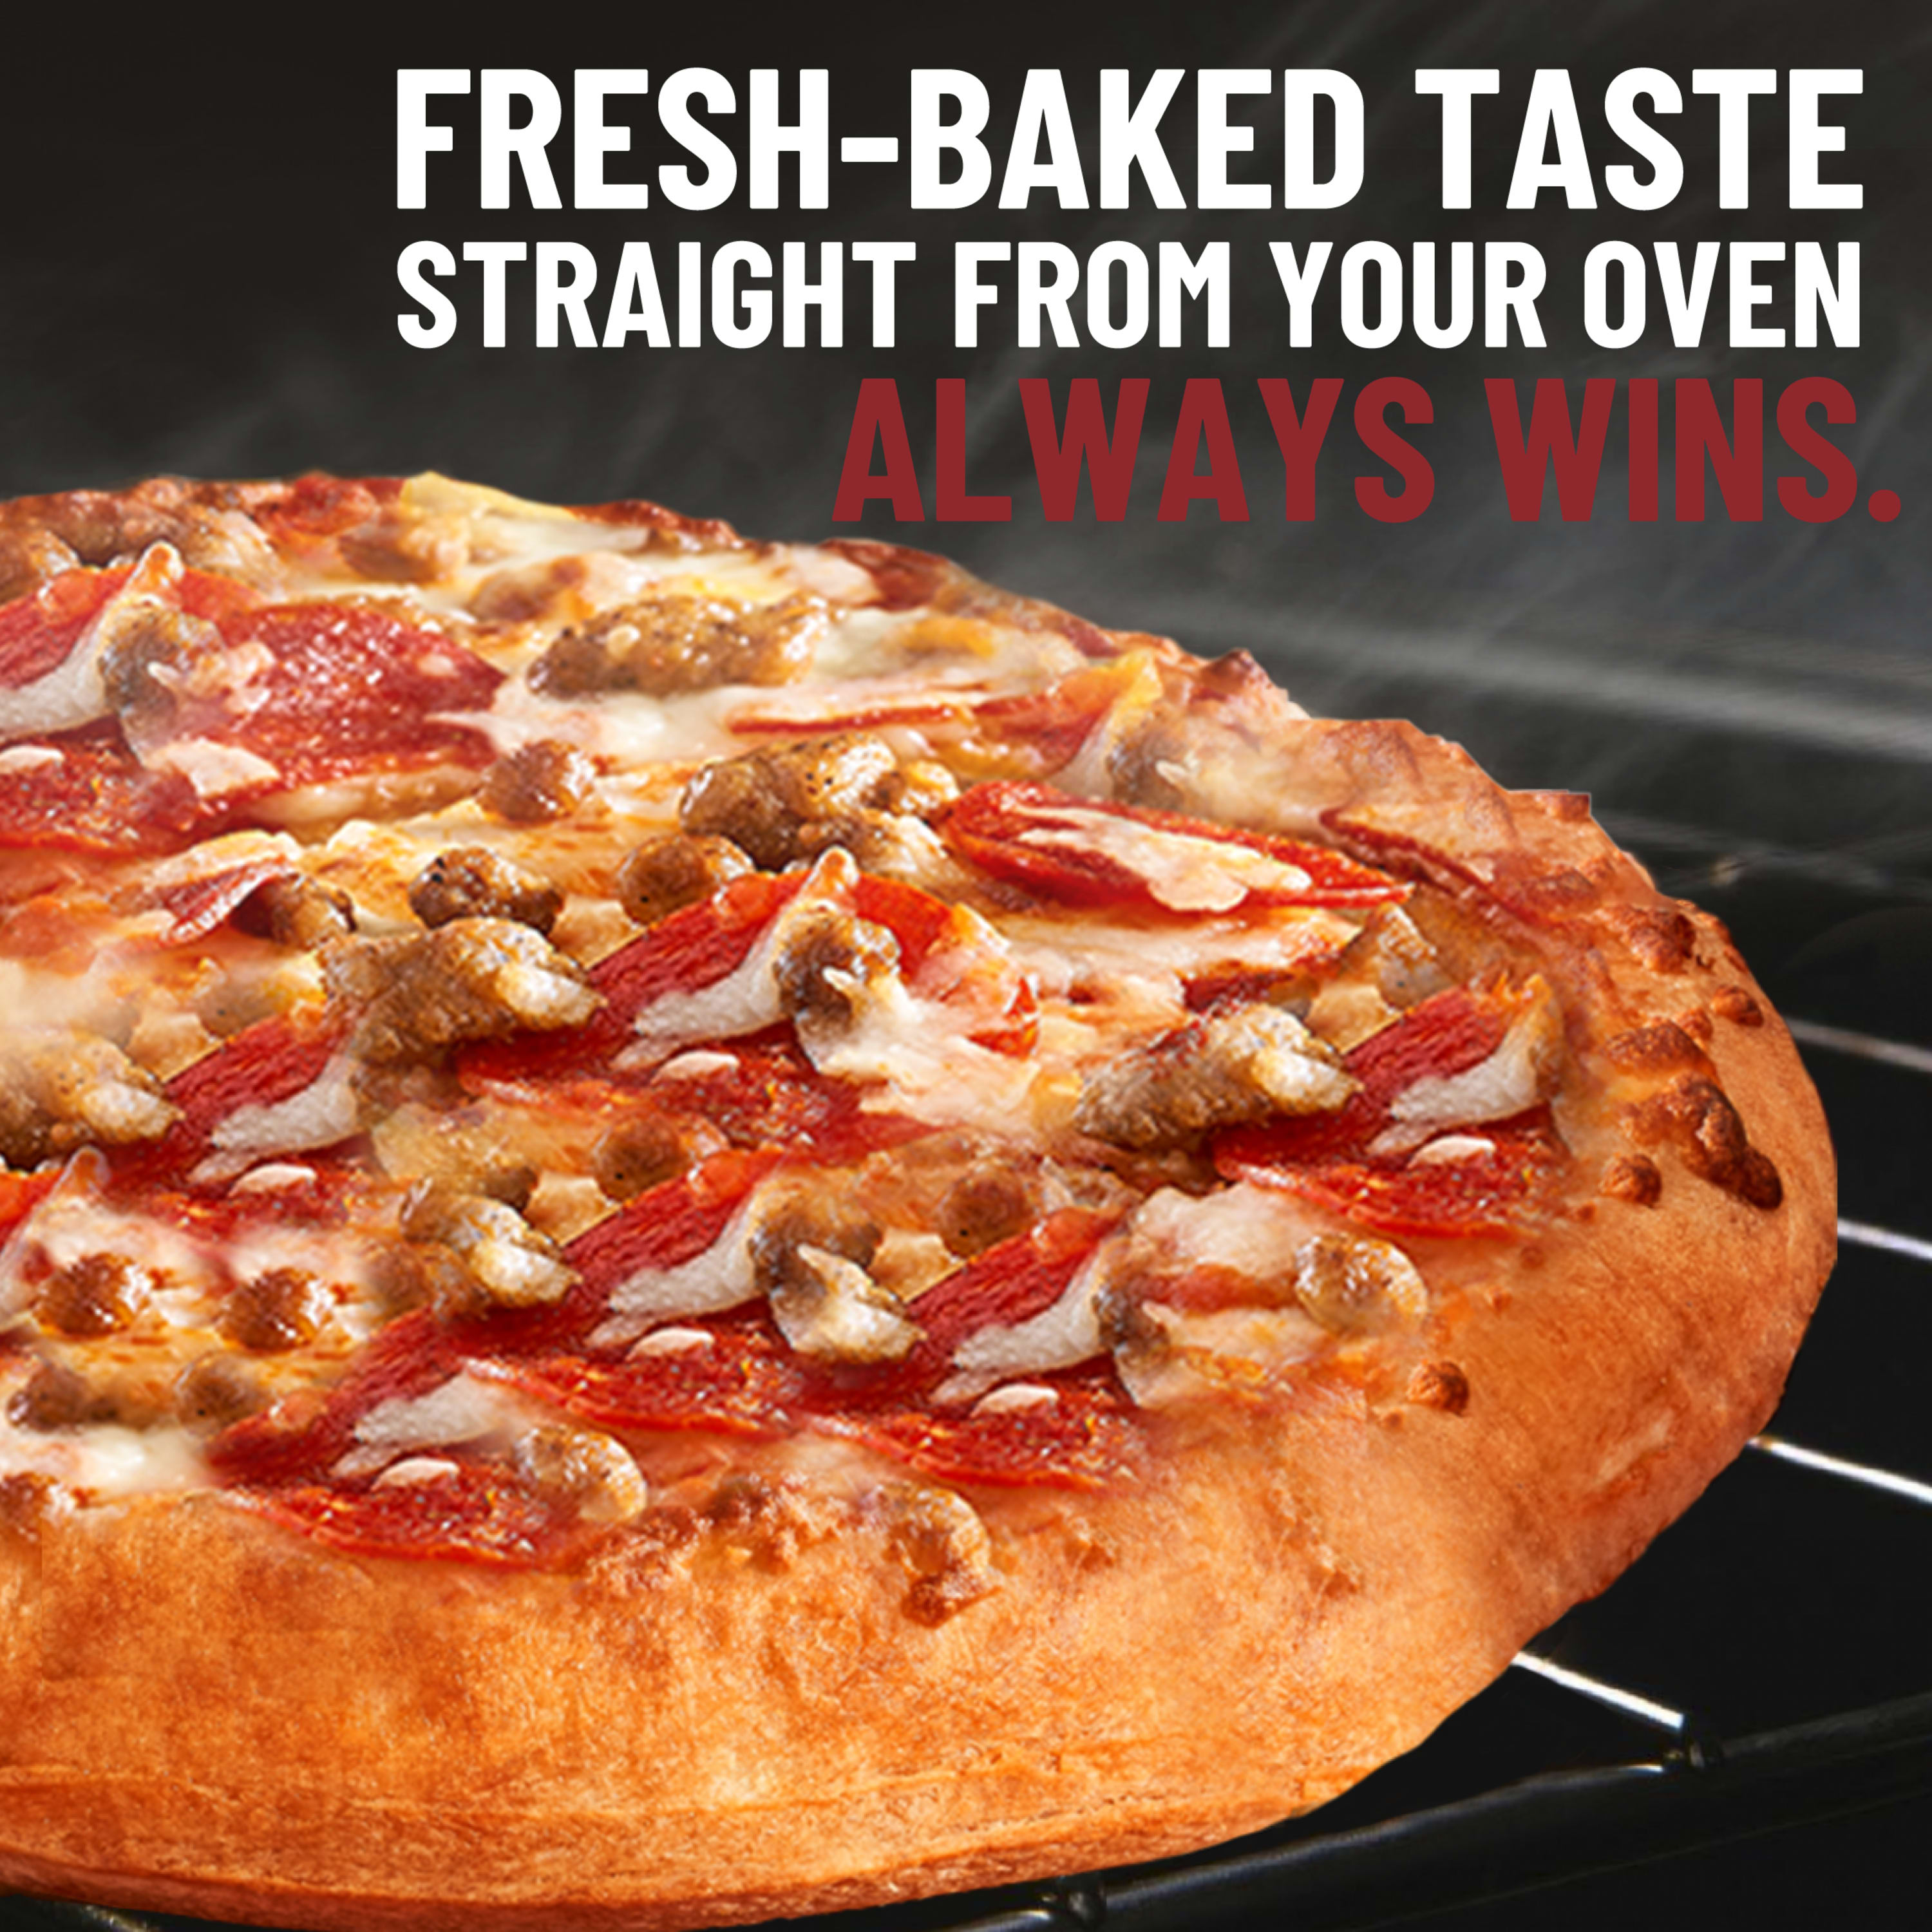 DiGiorno Frozen Pizza, Three Meat Rising Crust Pizza with Marinara Sauce, 29.8 oz (Frozen) - image 3 of 9